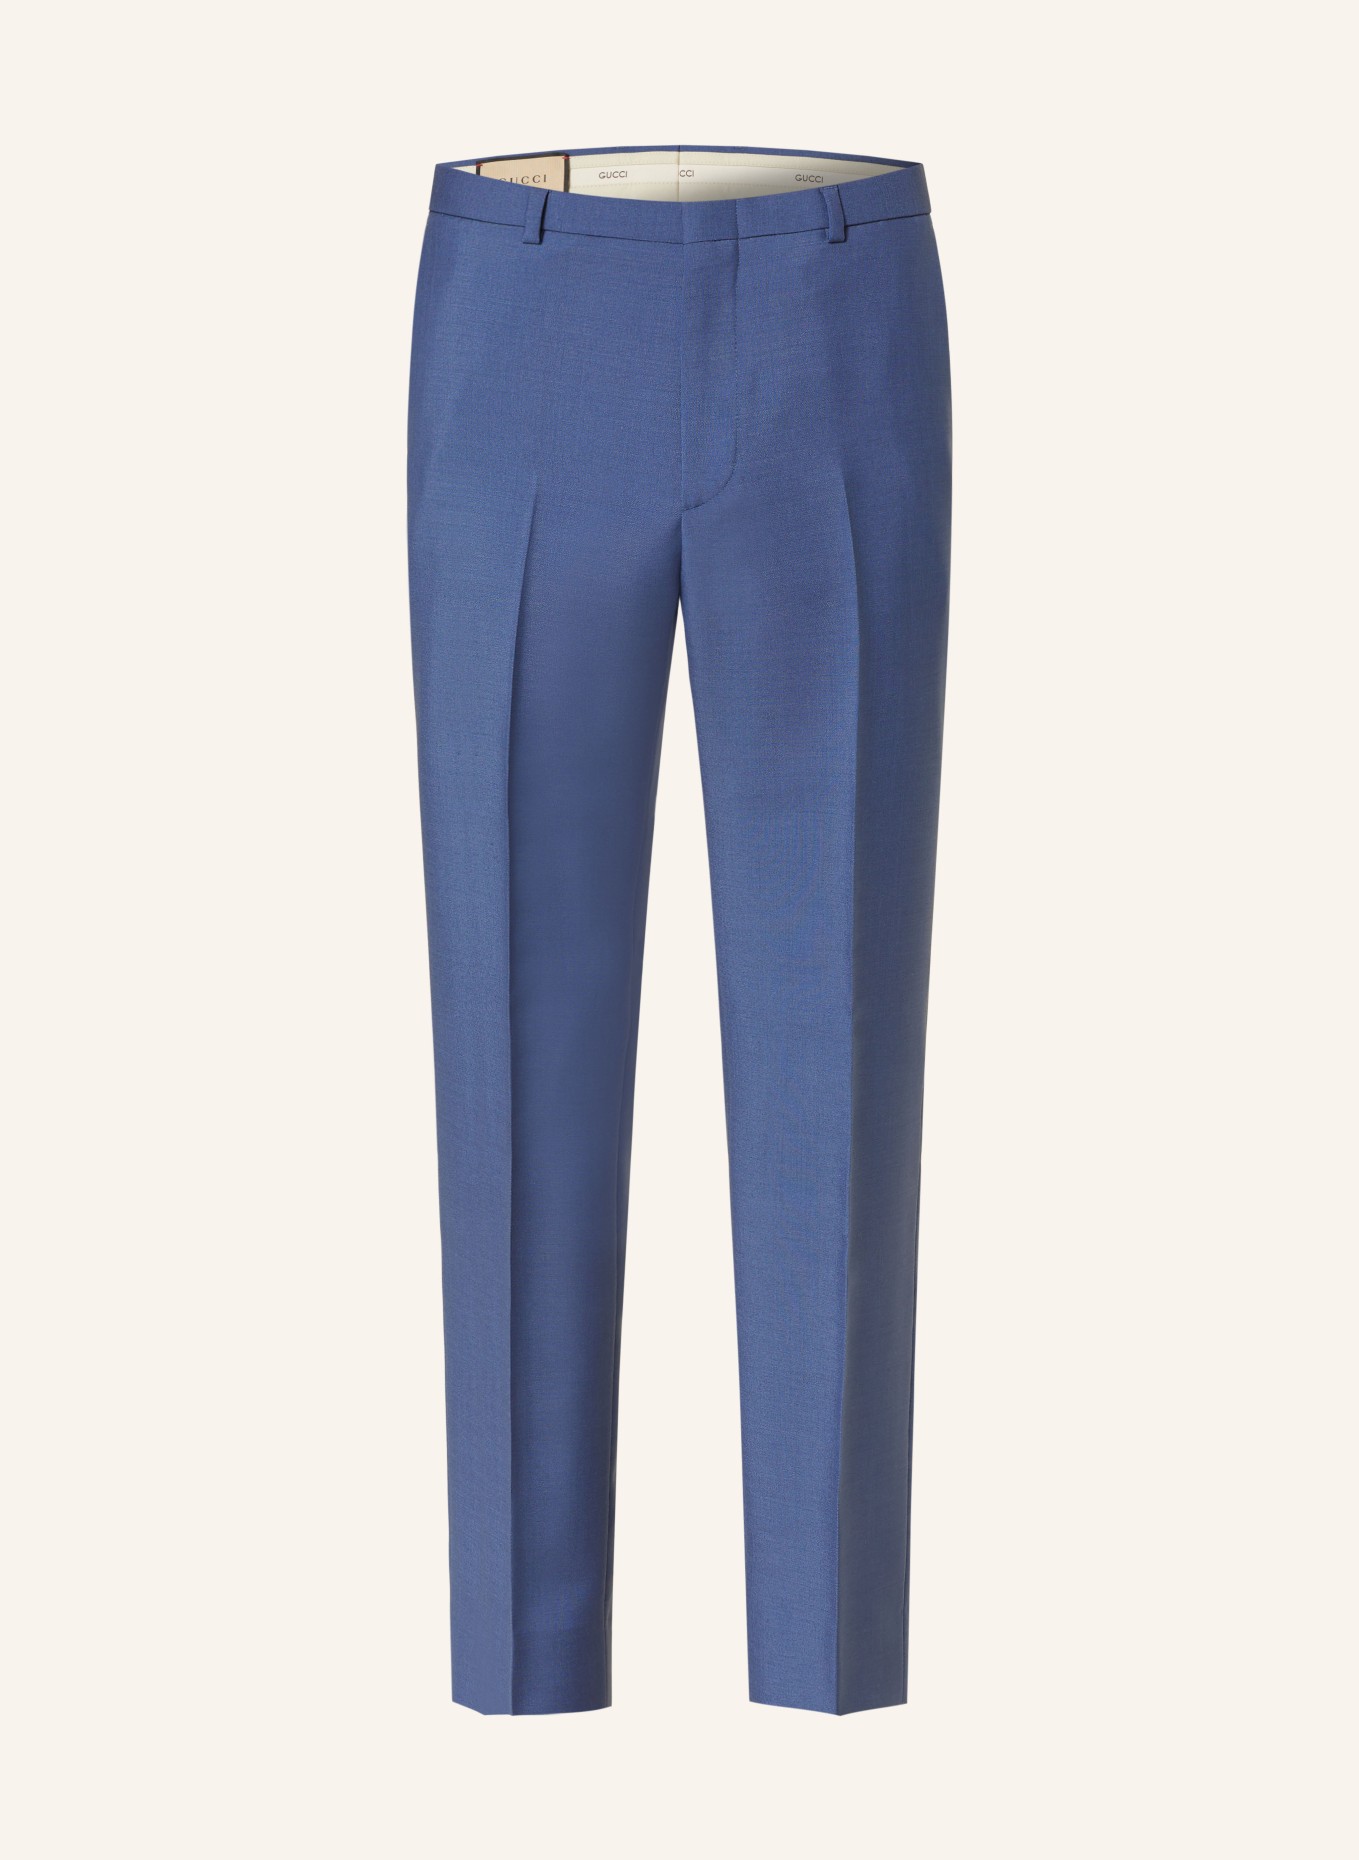 GUCCI Anzughose Slim Fit mit Mohair, Farbe: 4719 STORMY SEA (LIGHT BLUE) (Bild 1)